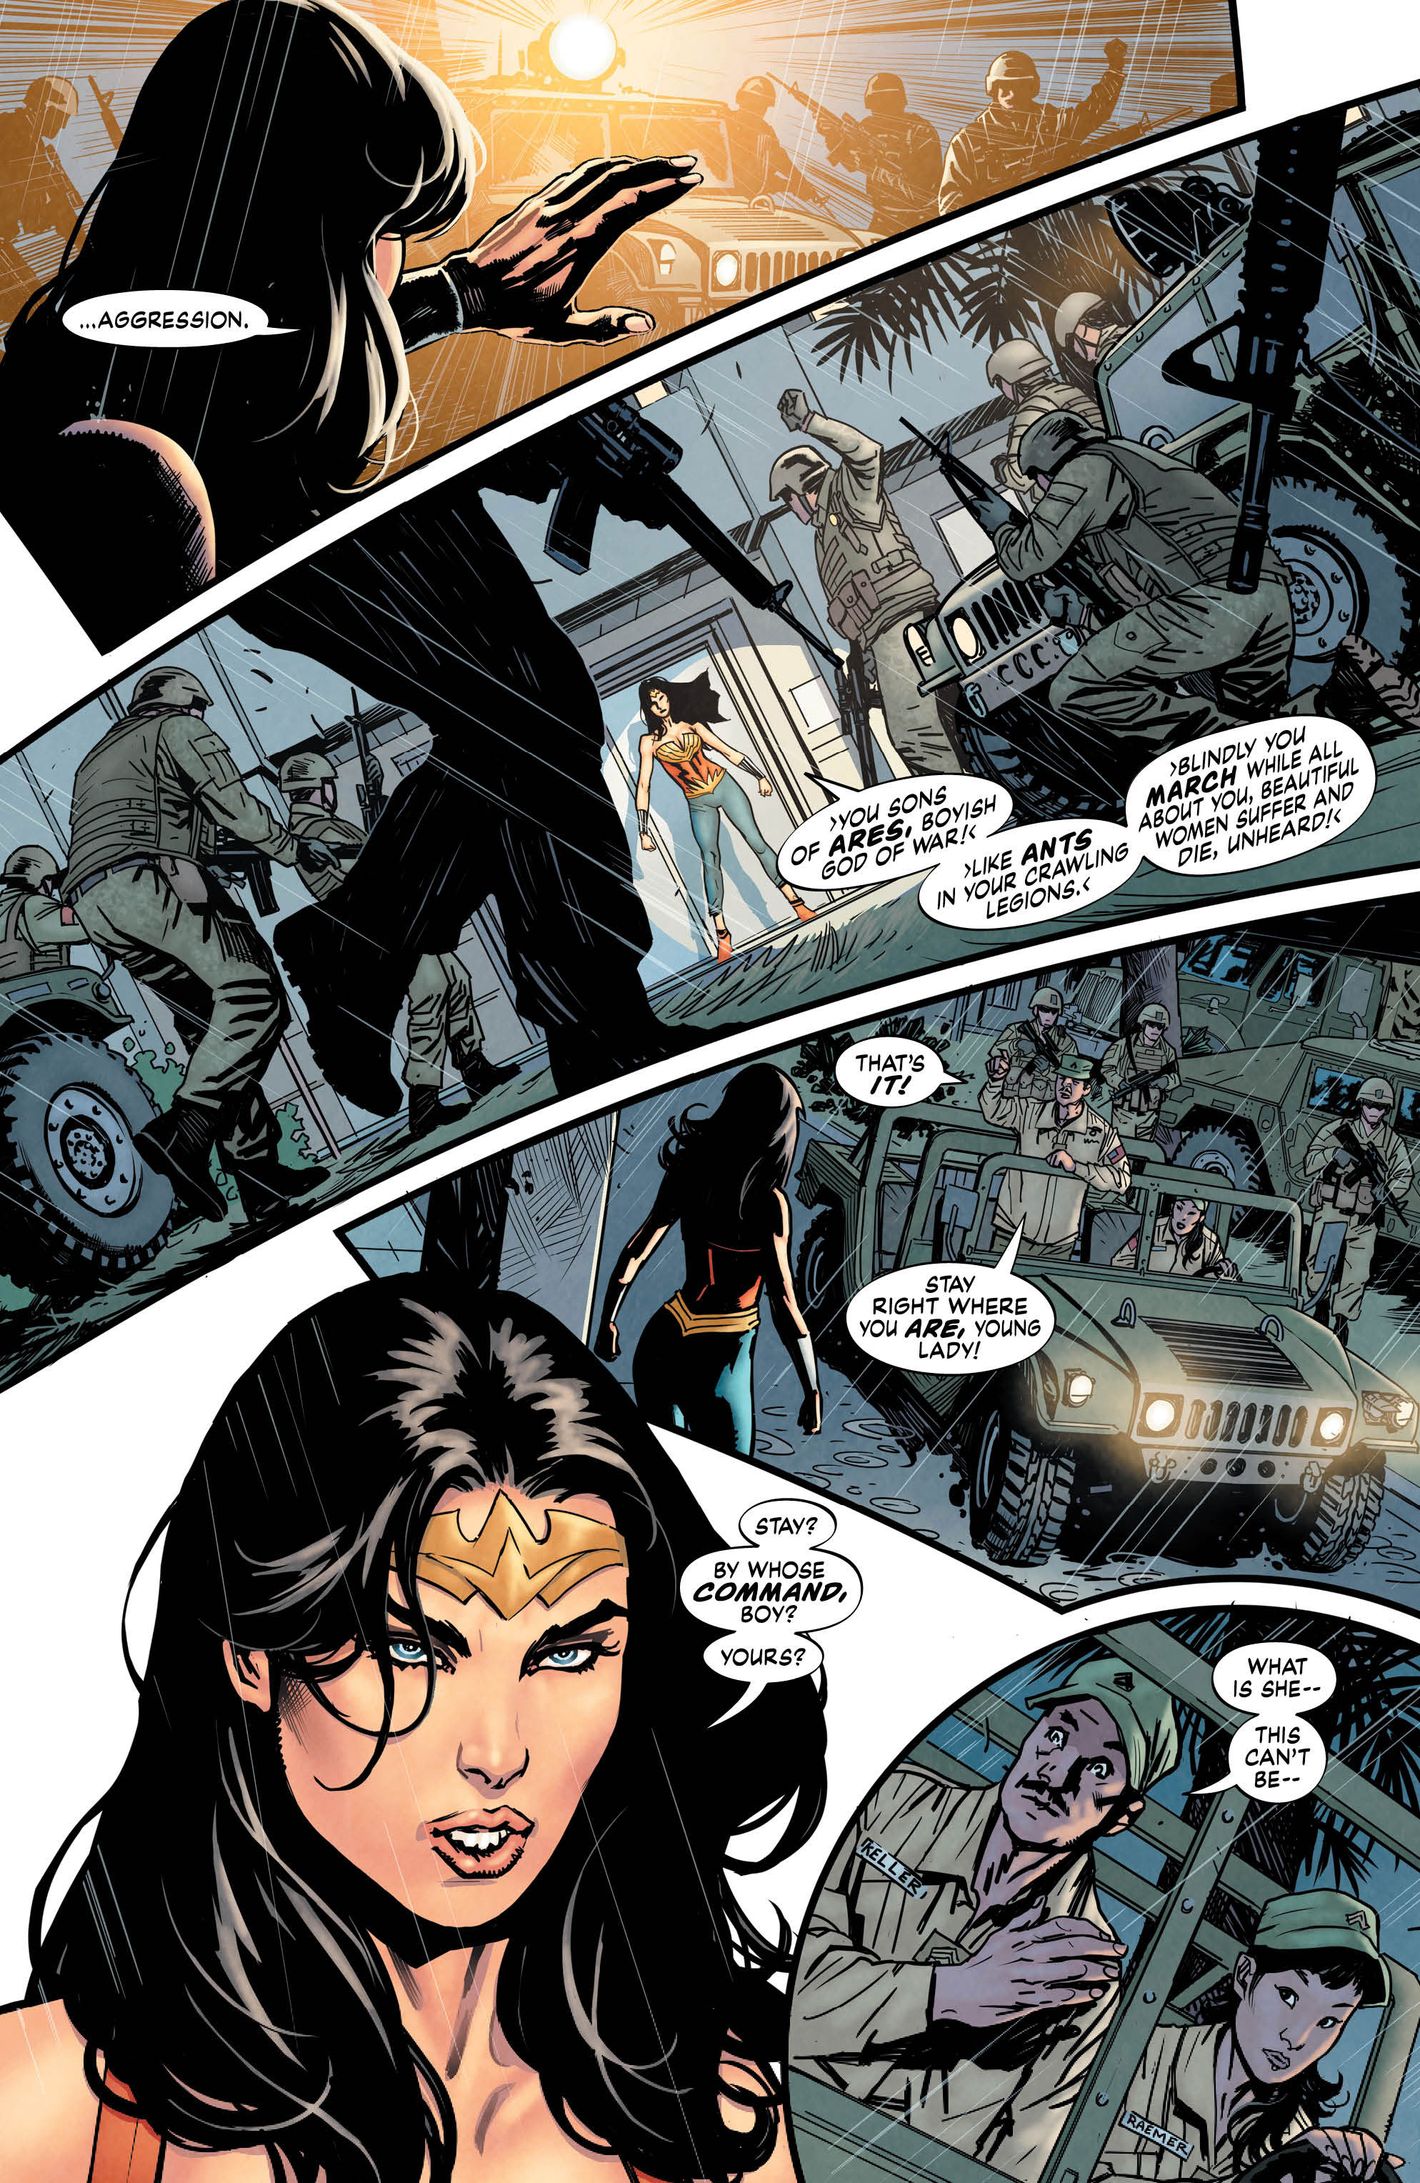 Wonder Woman's a Feminist Icon Now—Despite the Comic Books